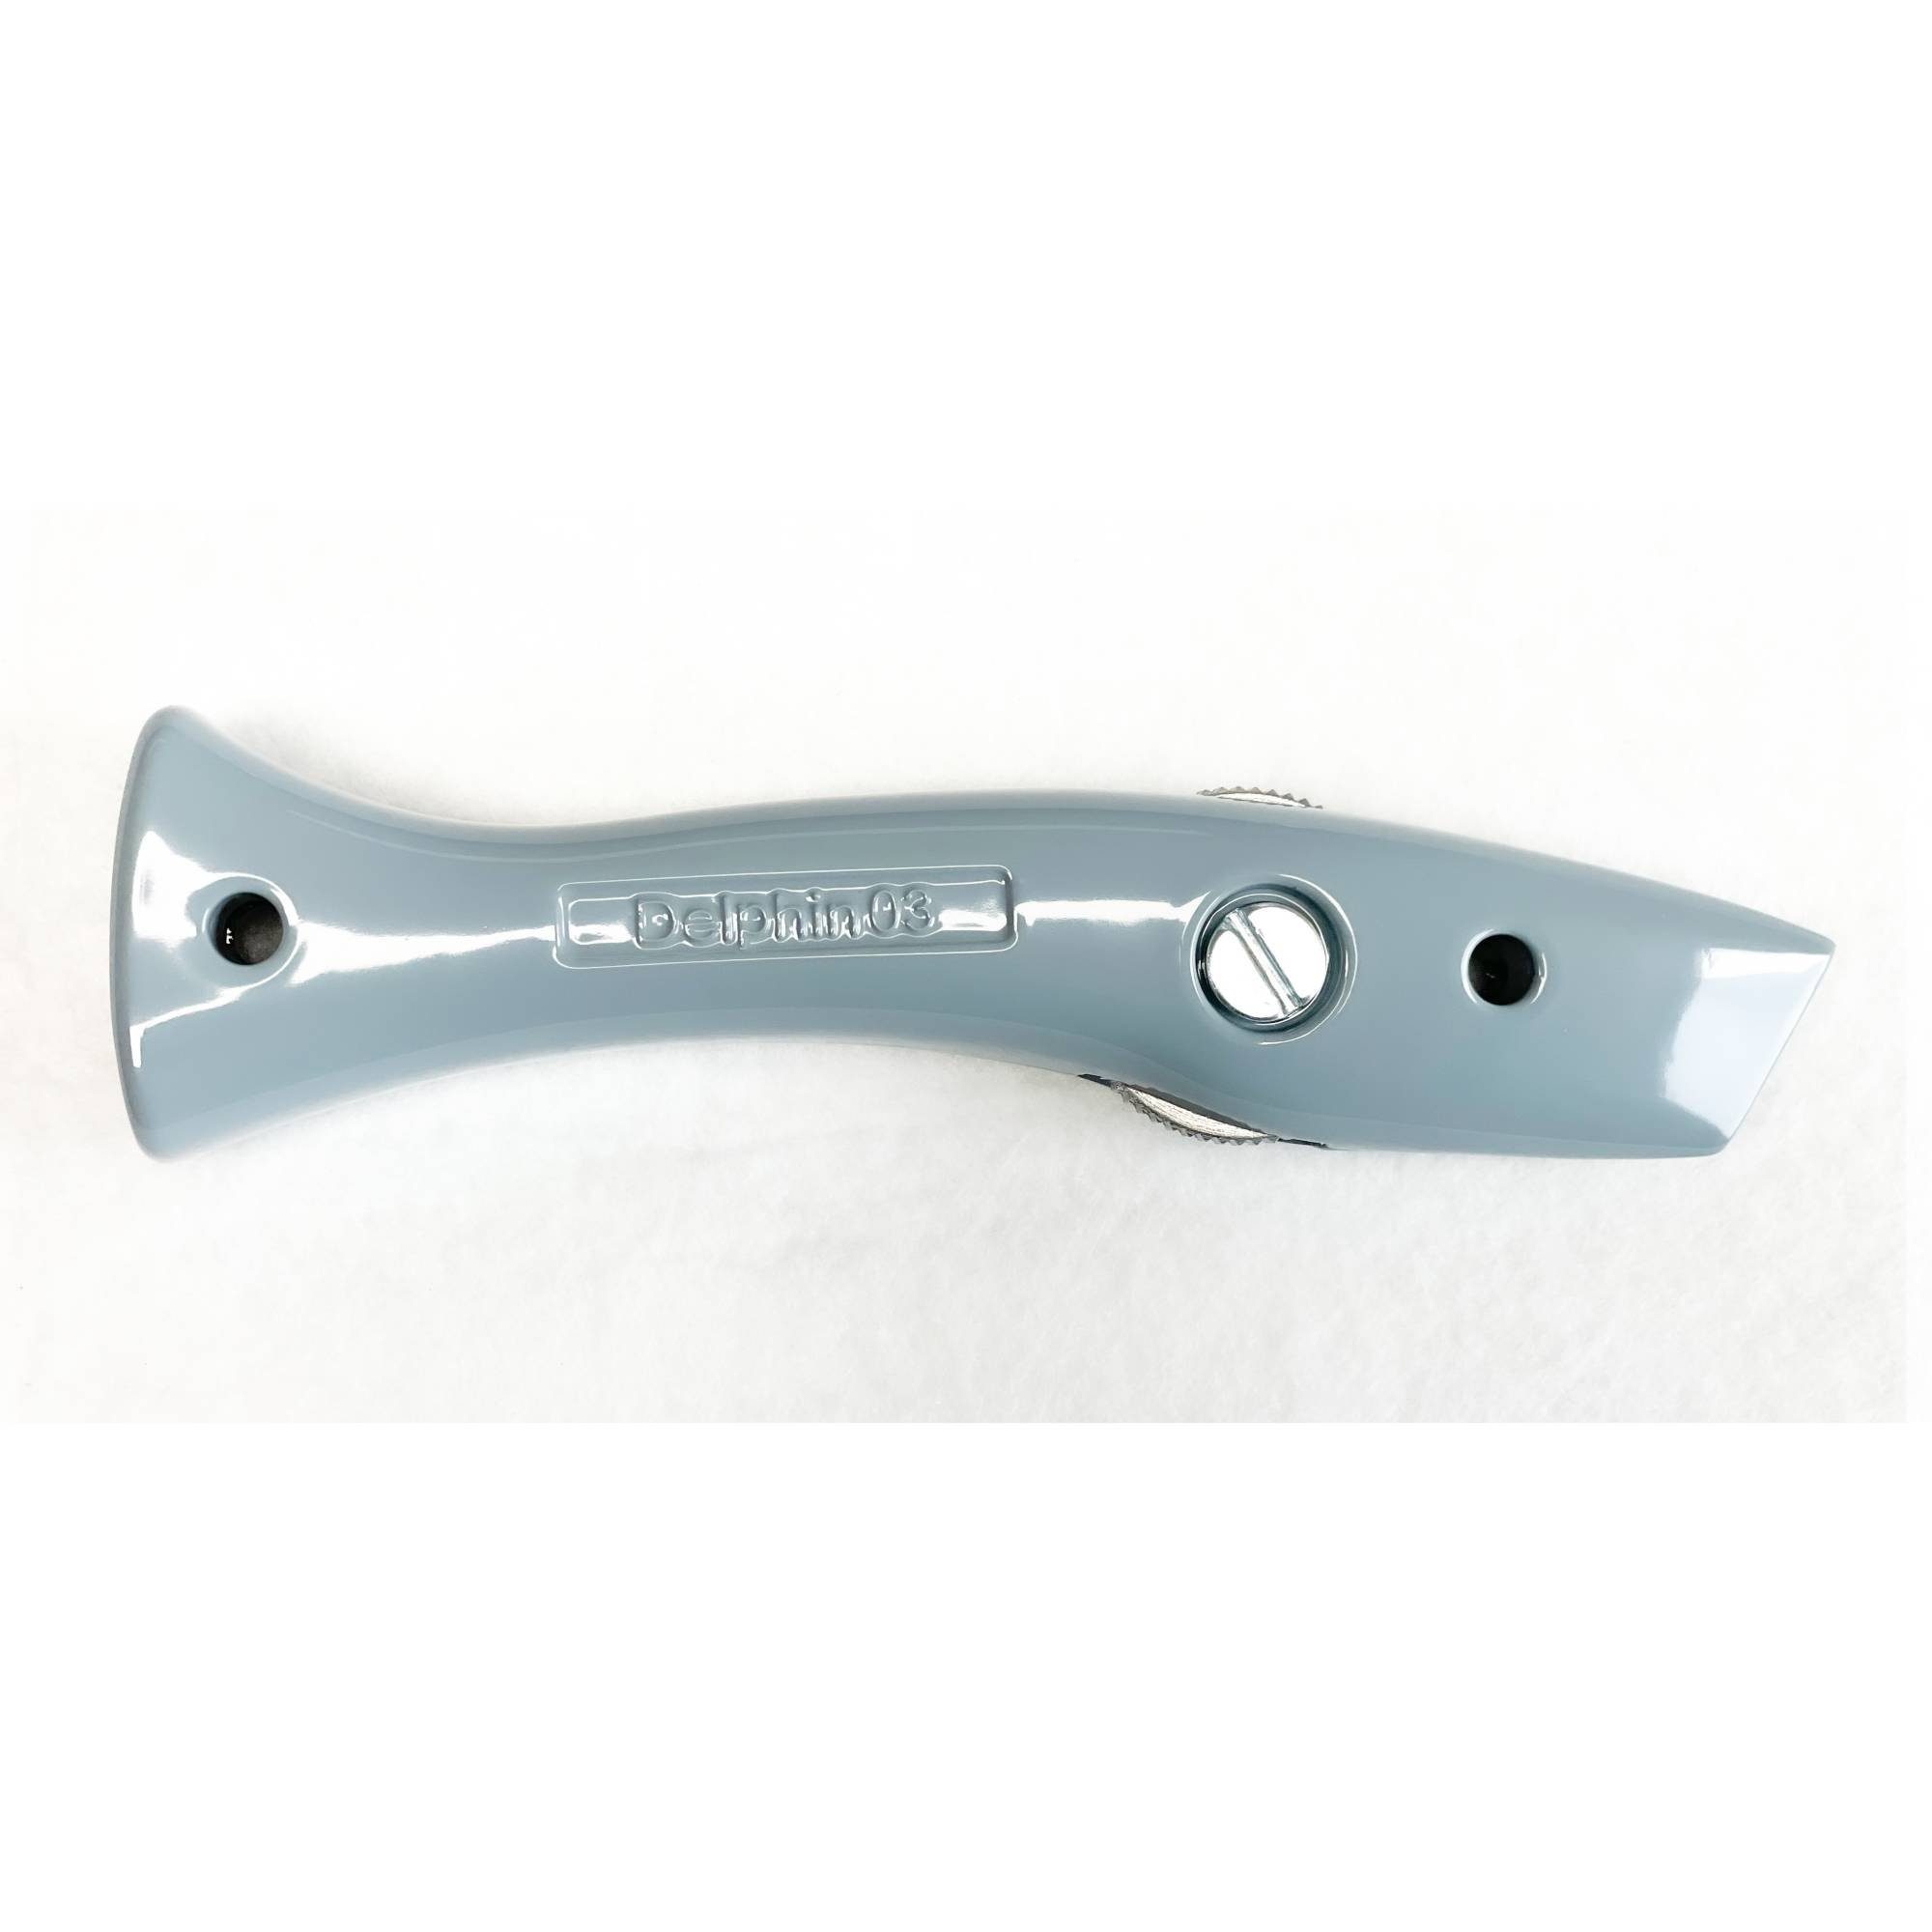 Delphin Cutter Delphin®-03 Universalmesser Style-Edition Cuttermesser Hellgrau